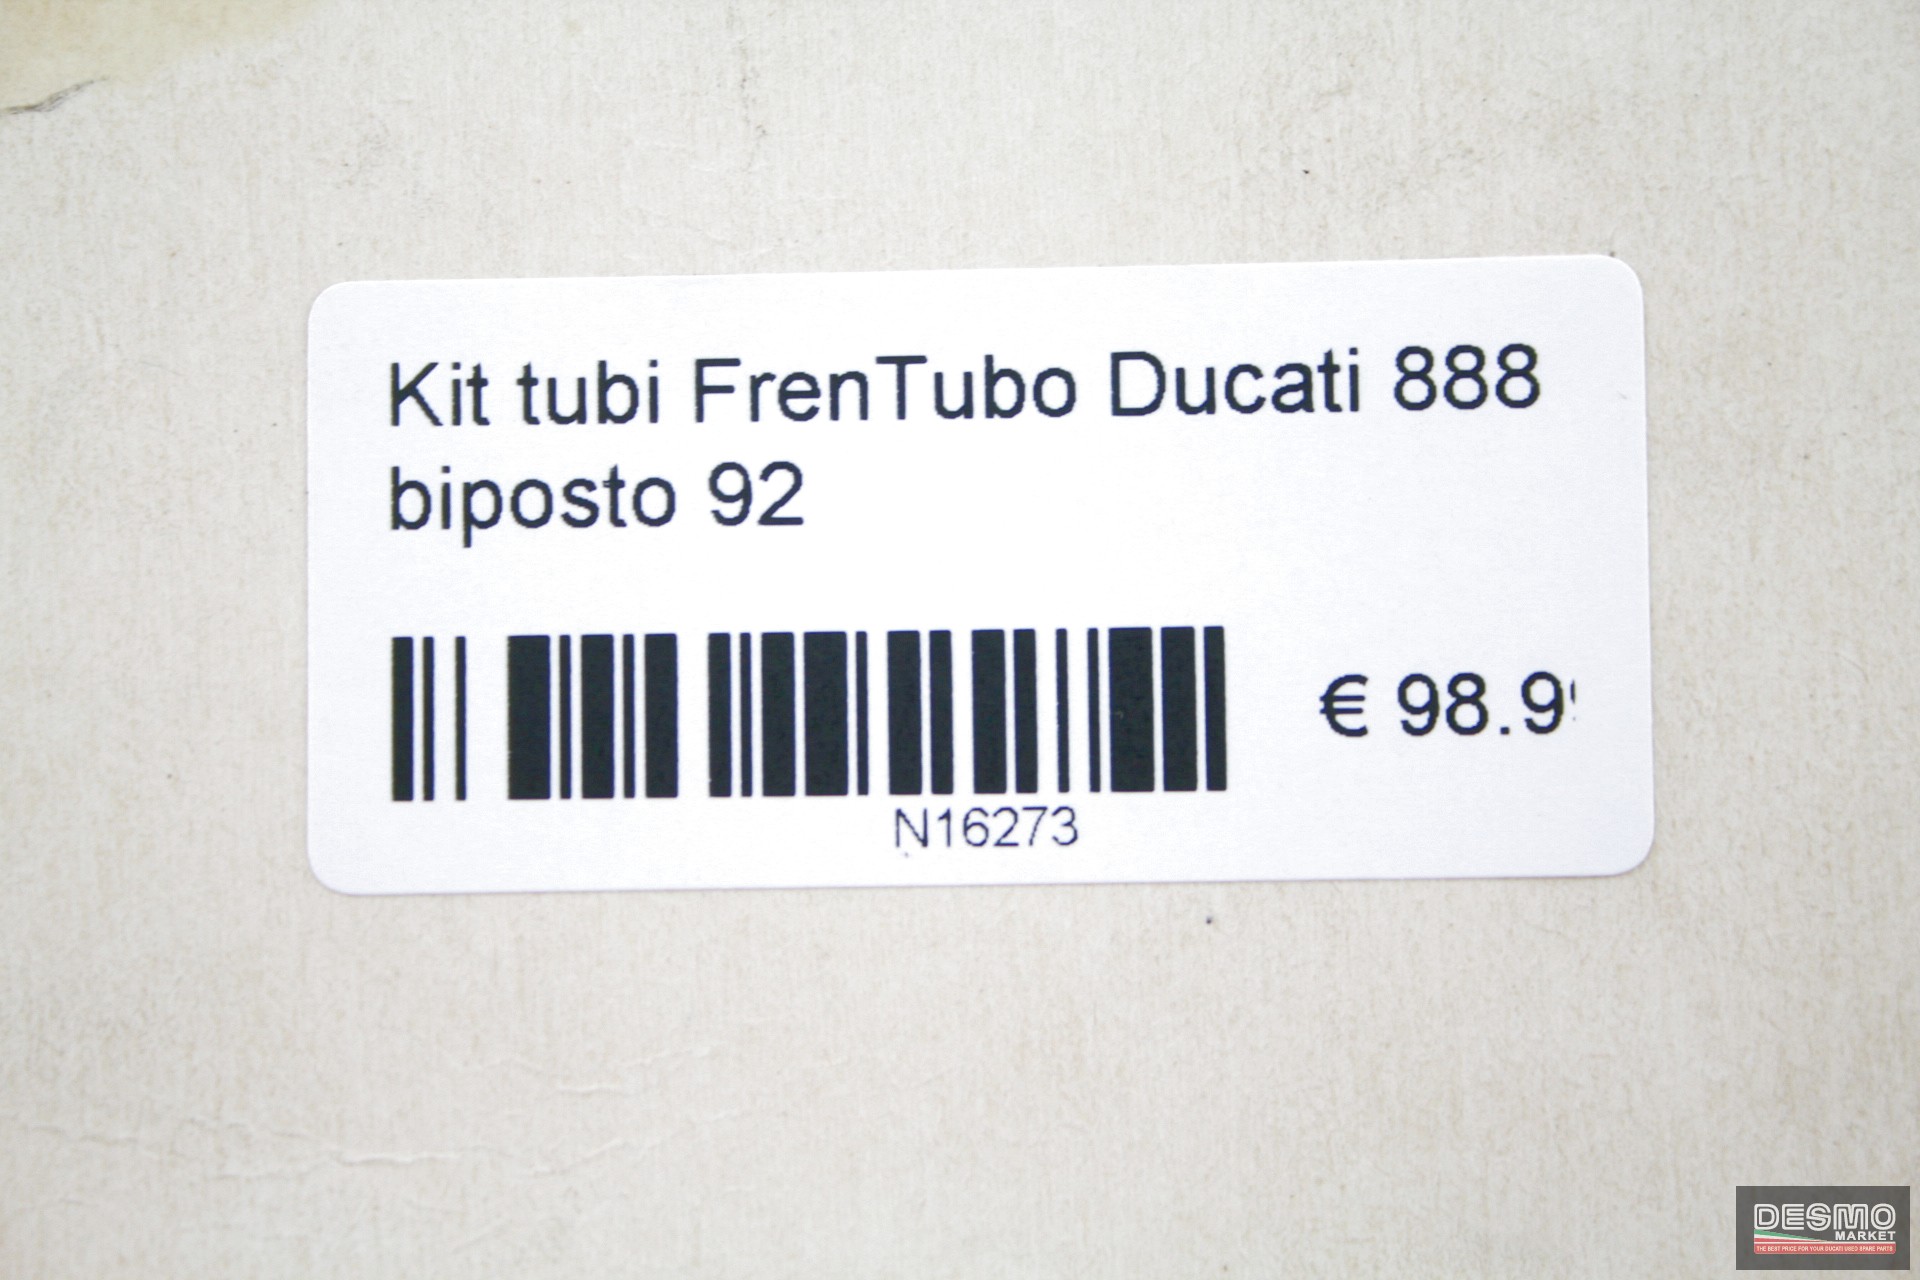 Kit tubi FrenTubo Ducati 888 biposto 92